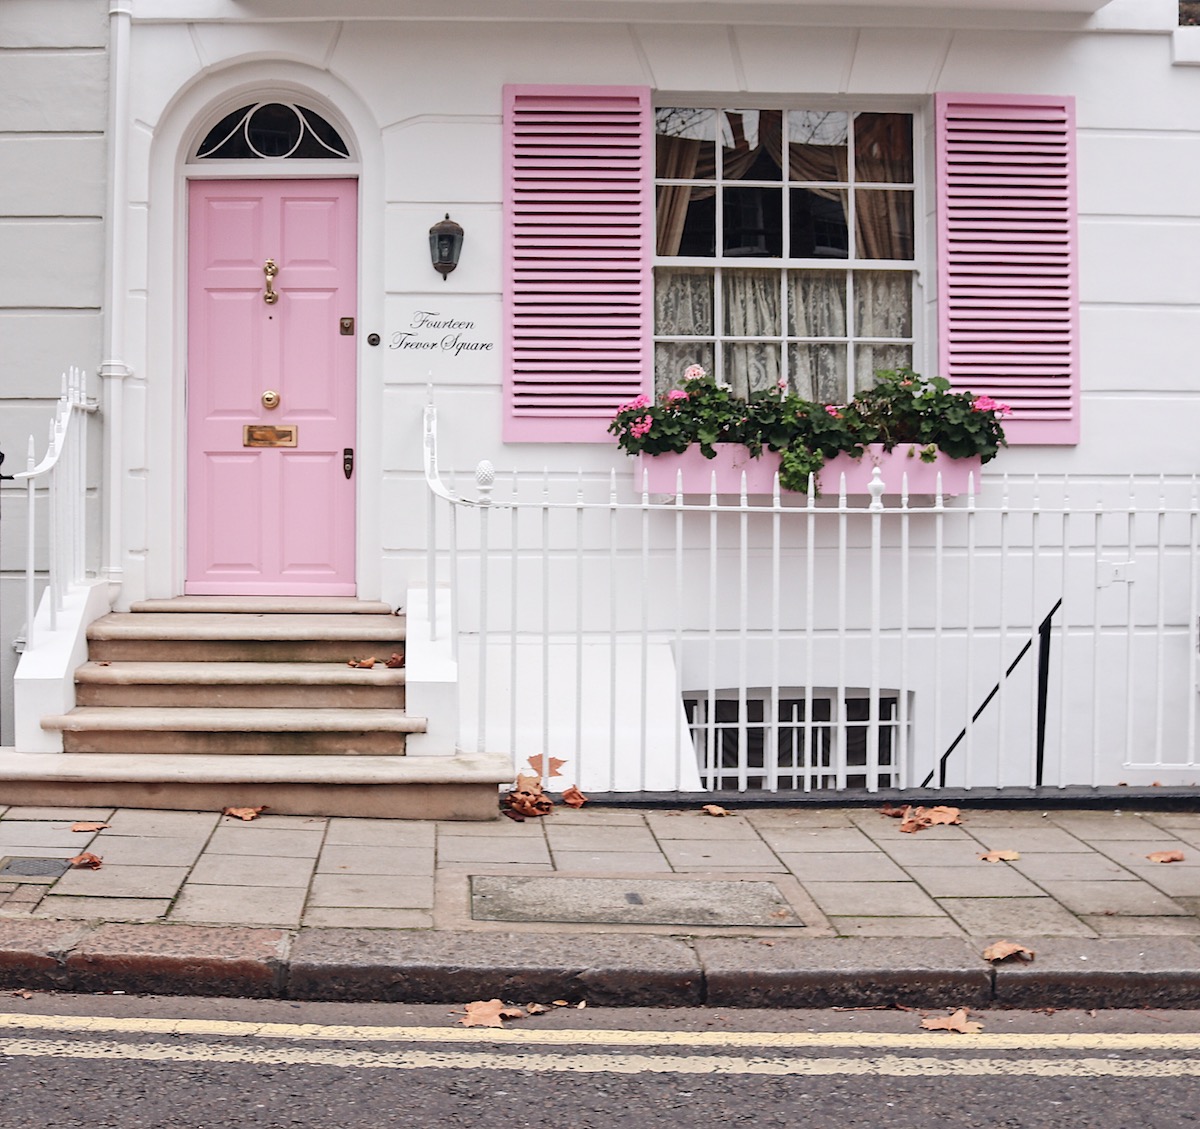 London Travel Guide Must Sees Tour Wochenende Trip rosa Tür rosa Haus Hotspots schönste Plätze Spots für Instagram Bilder Fotos tolle Restaurants